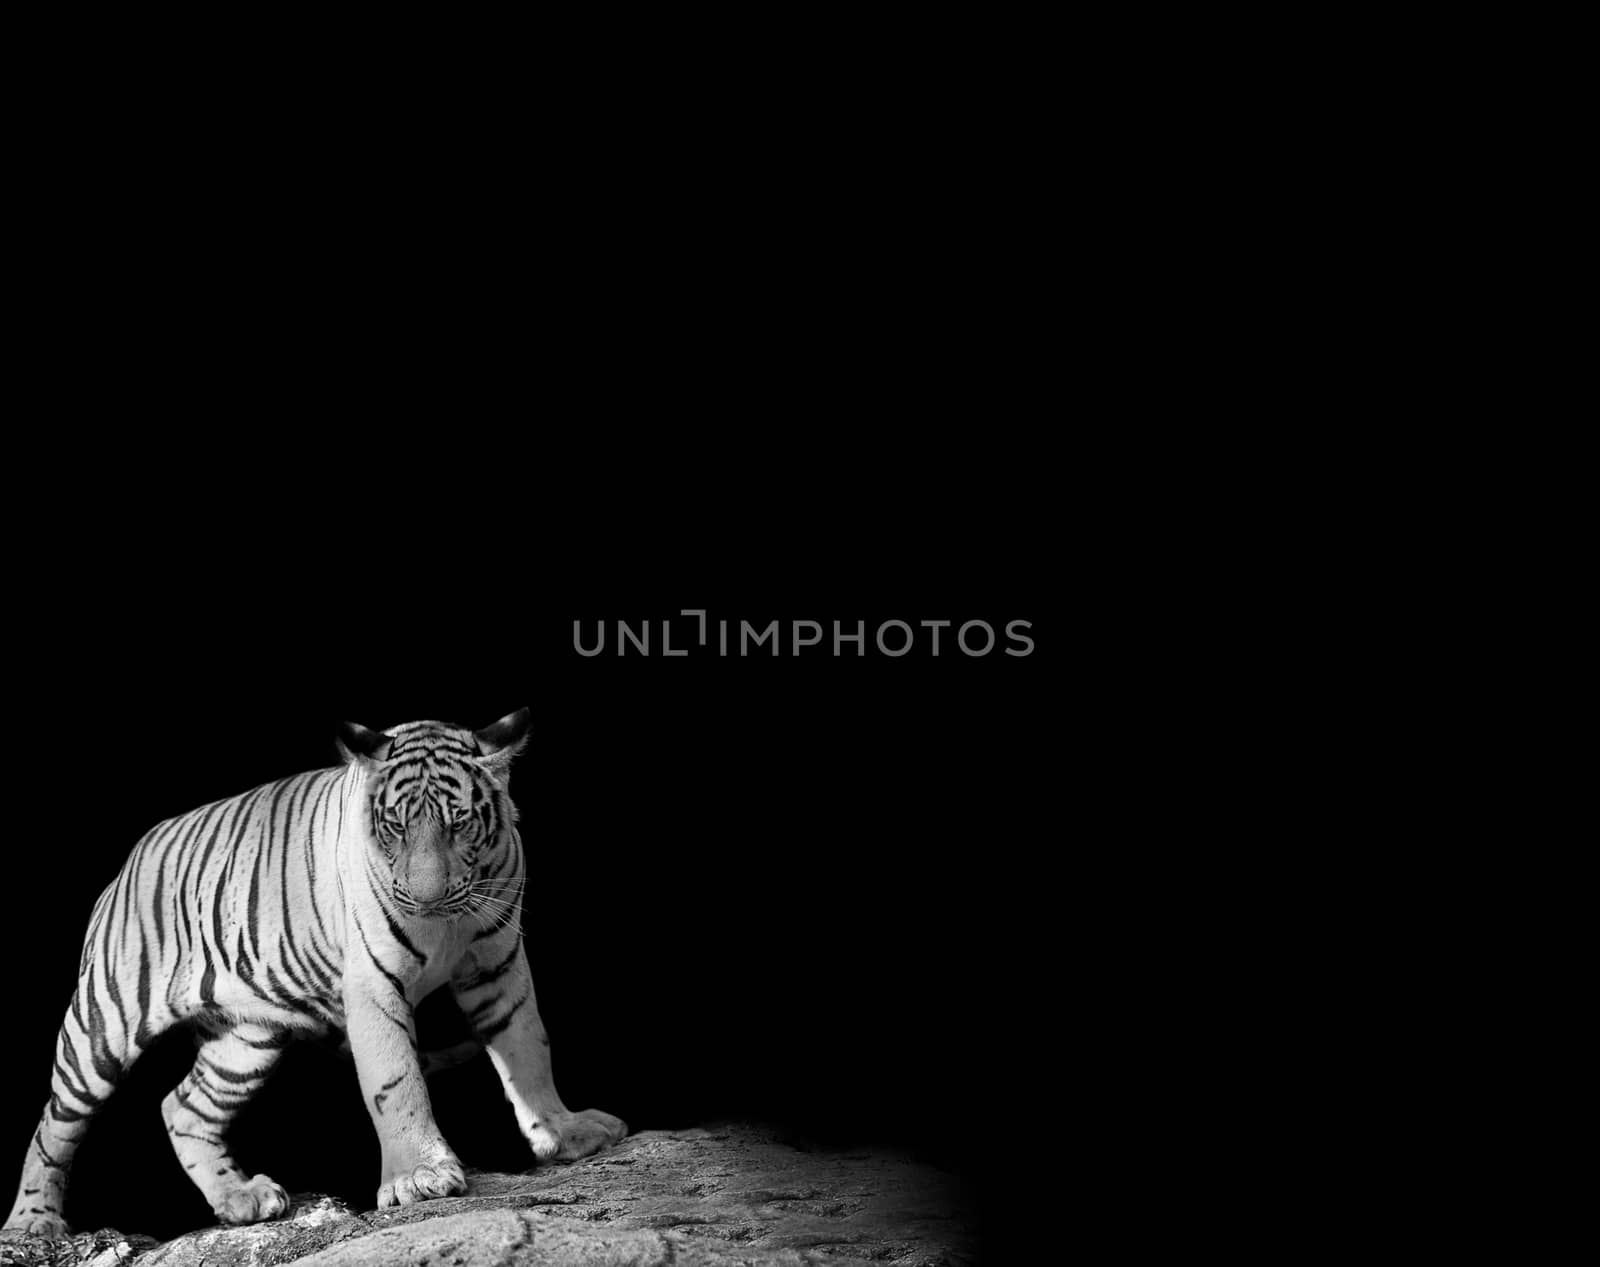 animal wildlife concept. Black & White Beautiful tiger - isolated on black background